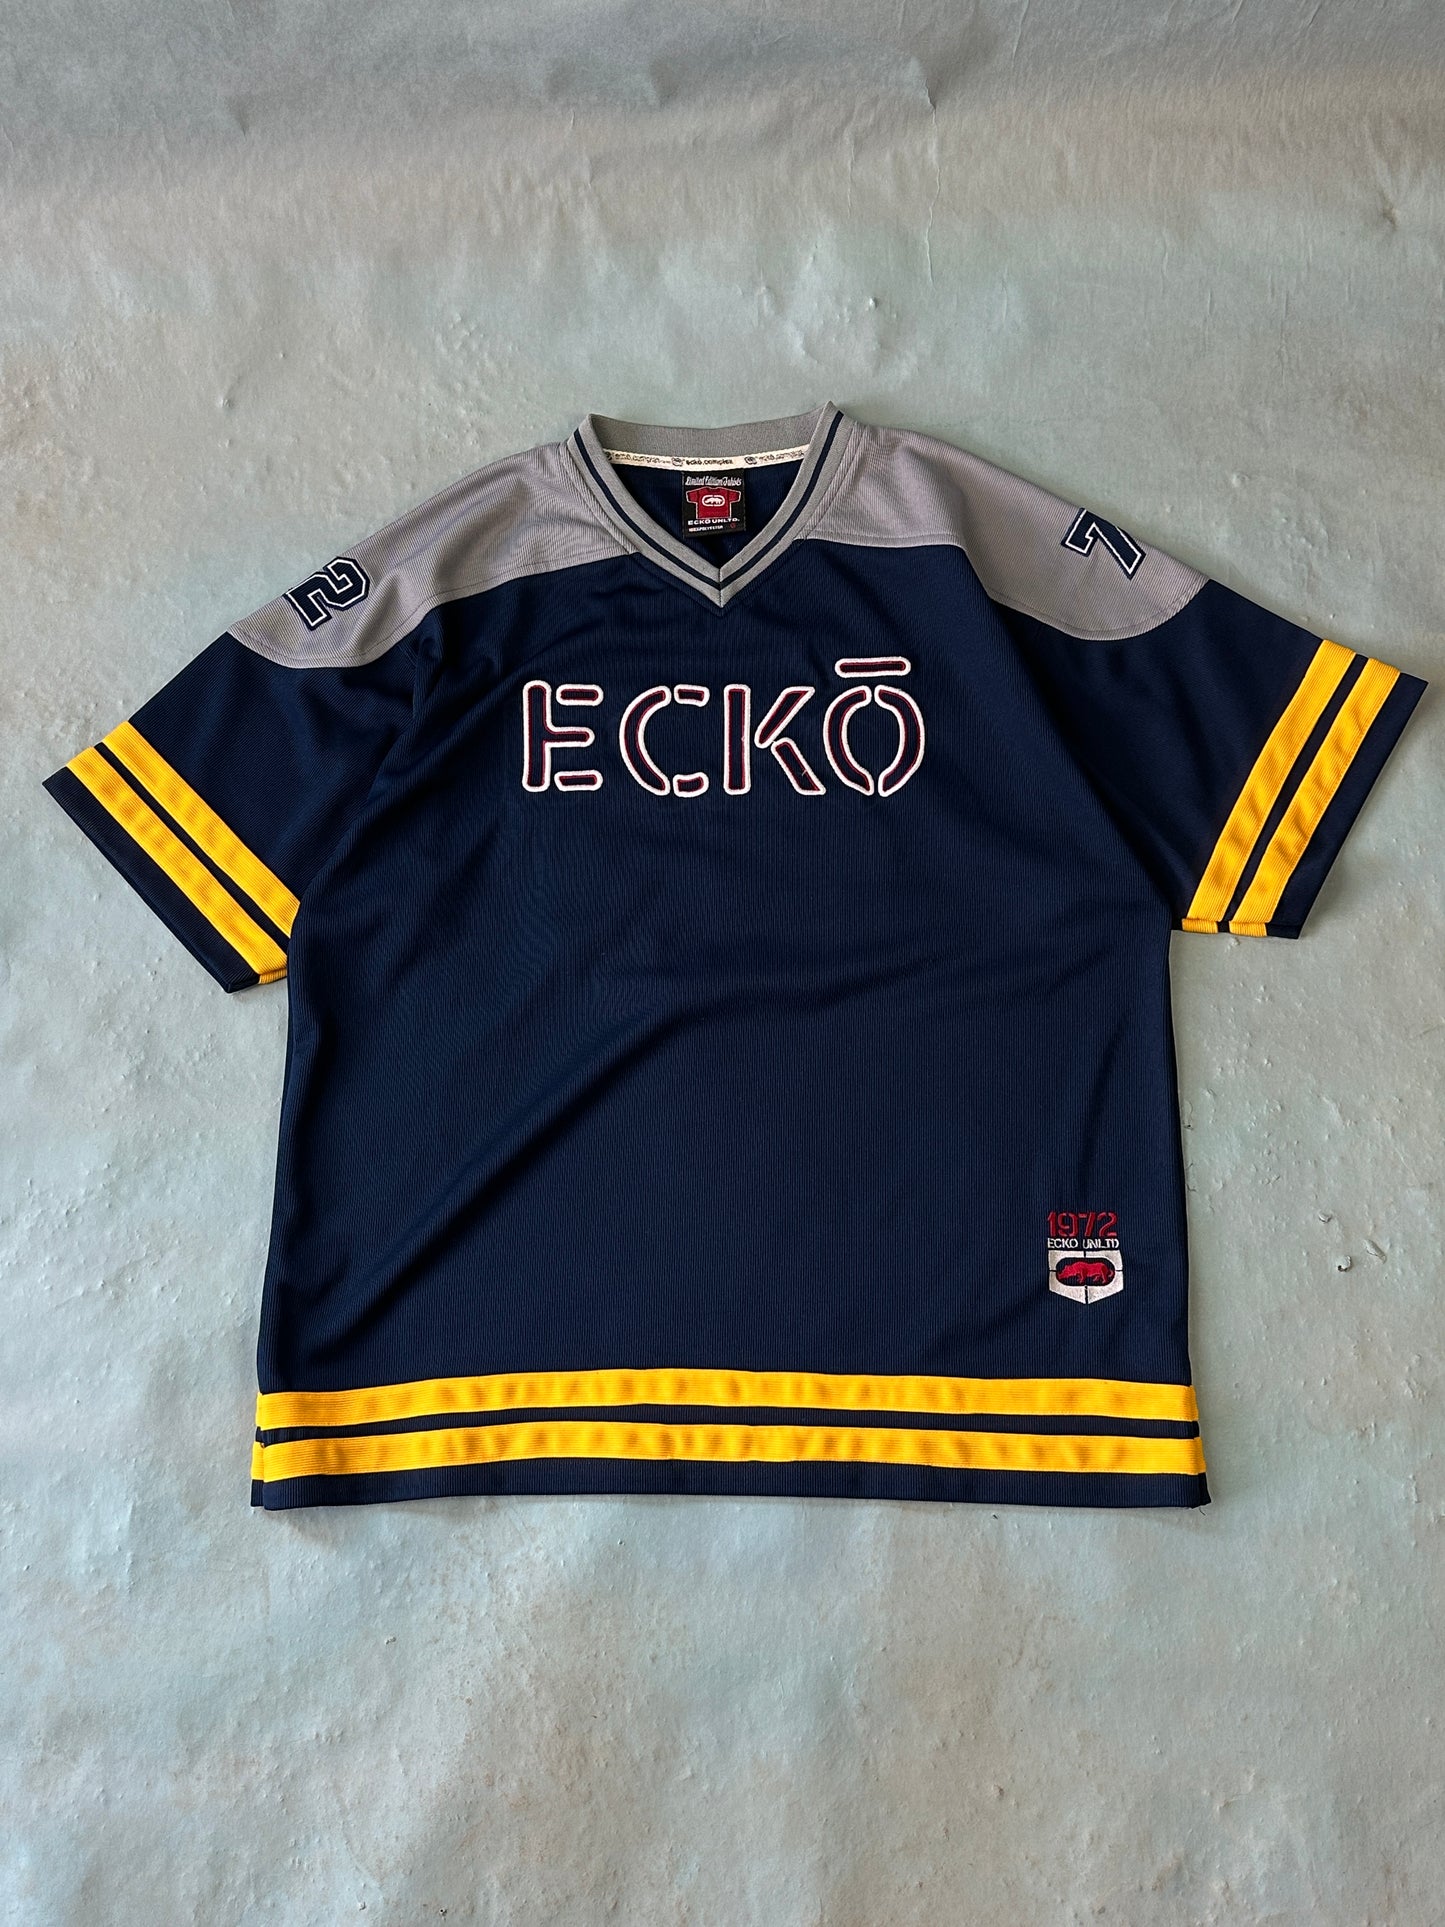 Ecko Unltd. Vintage Jersey - L